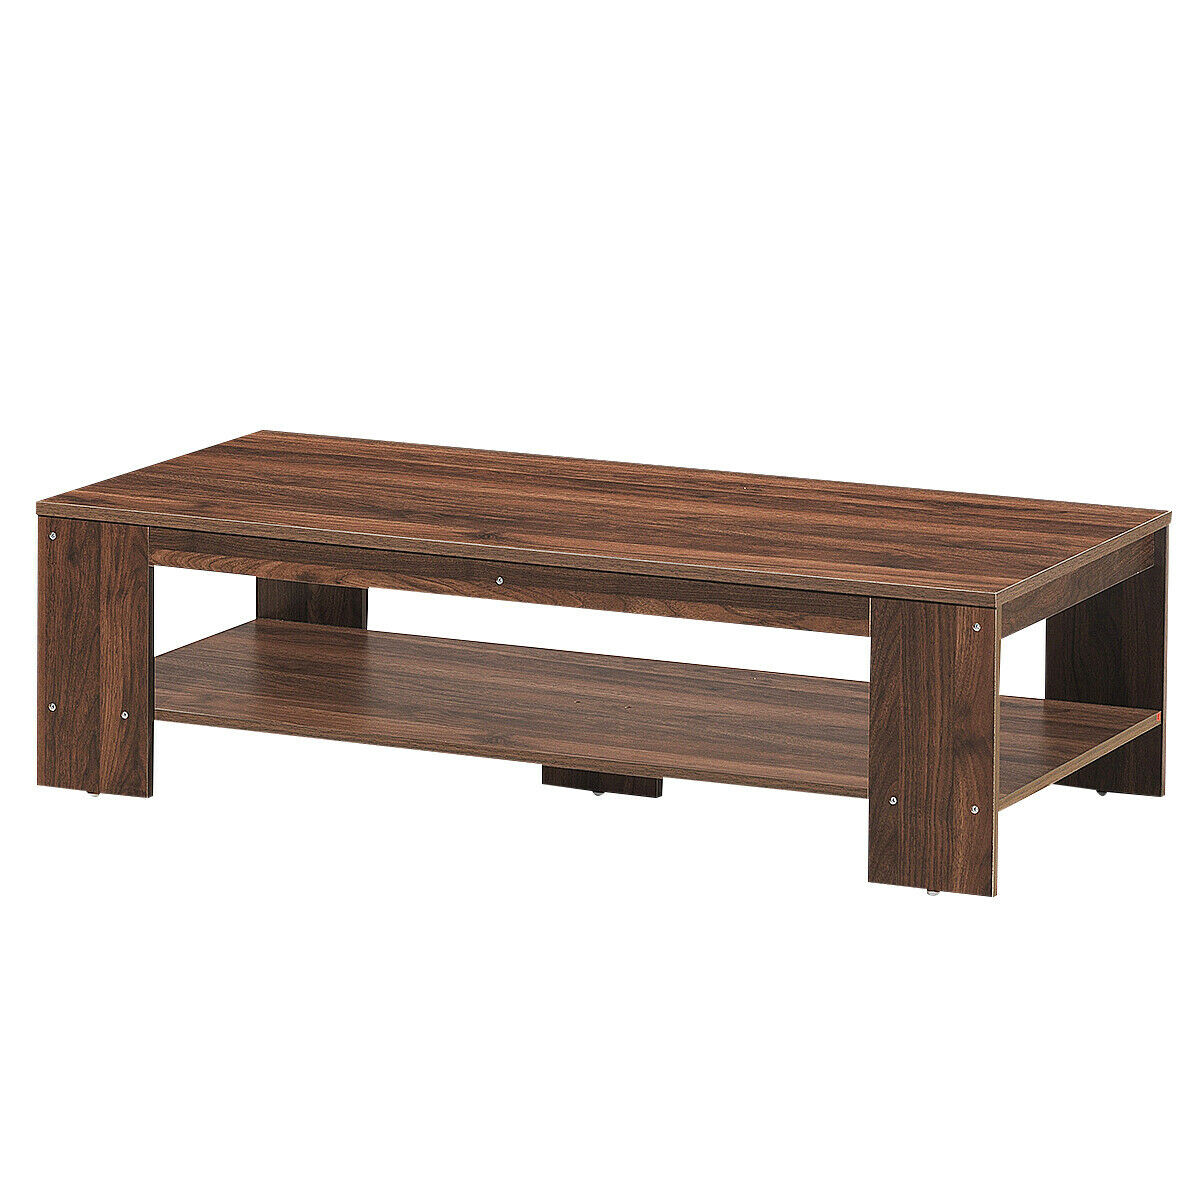 47 Inch 2-Tier Rectangular Coffee Table with Storage Shelf - Color: Walnut